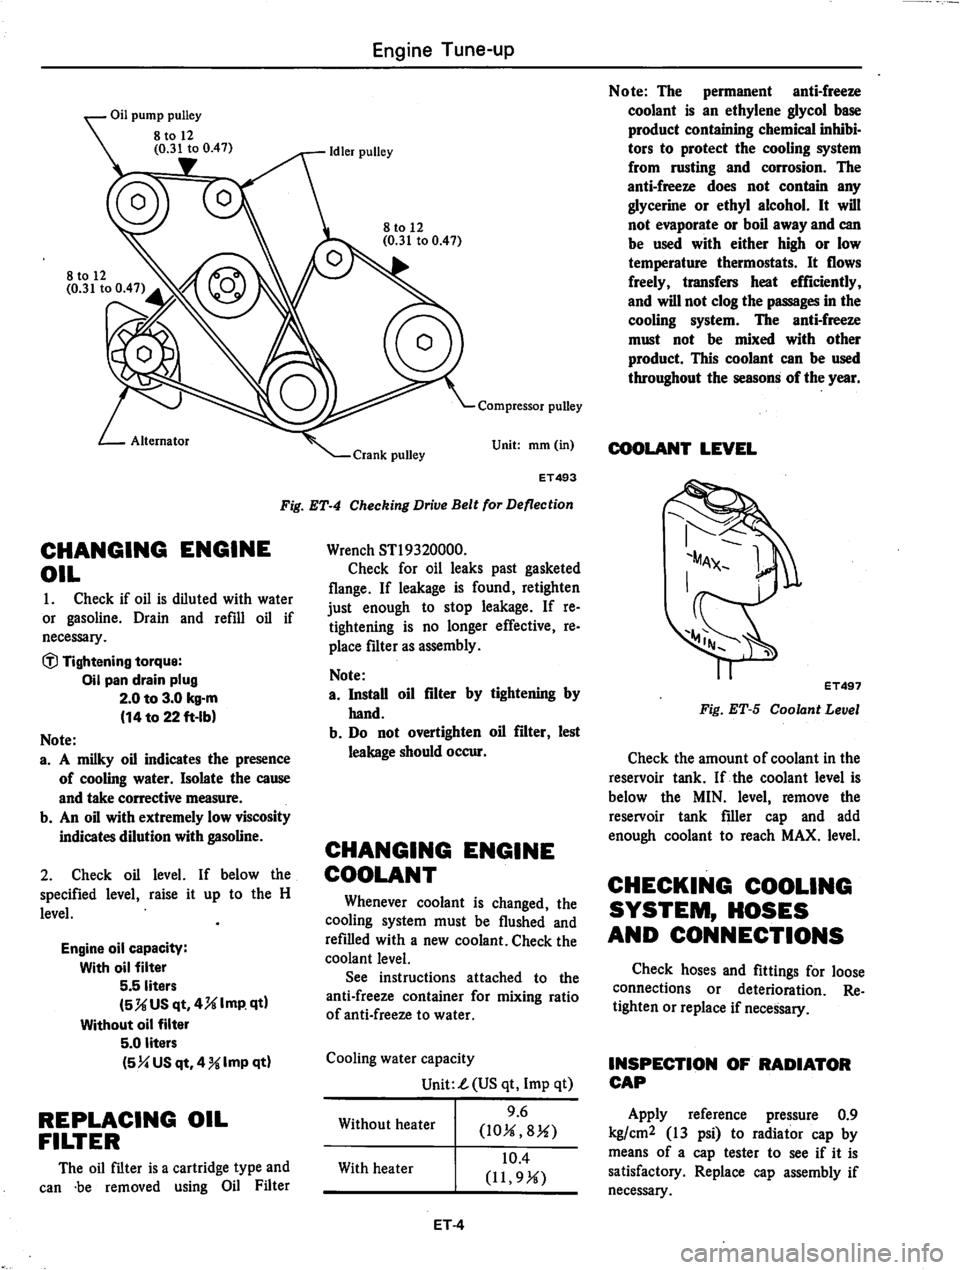 DATSUN 810 1979  Service Manual 